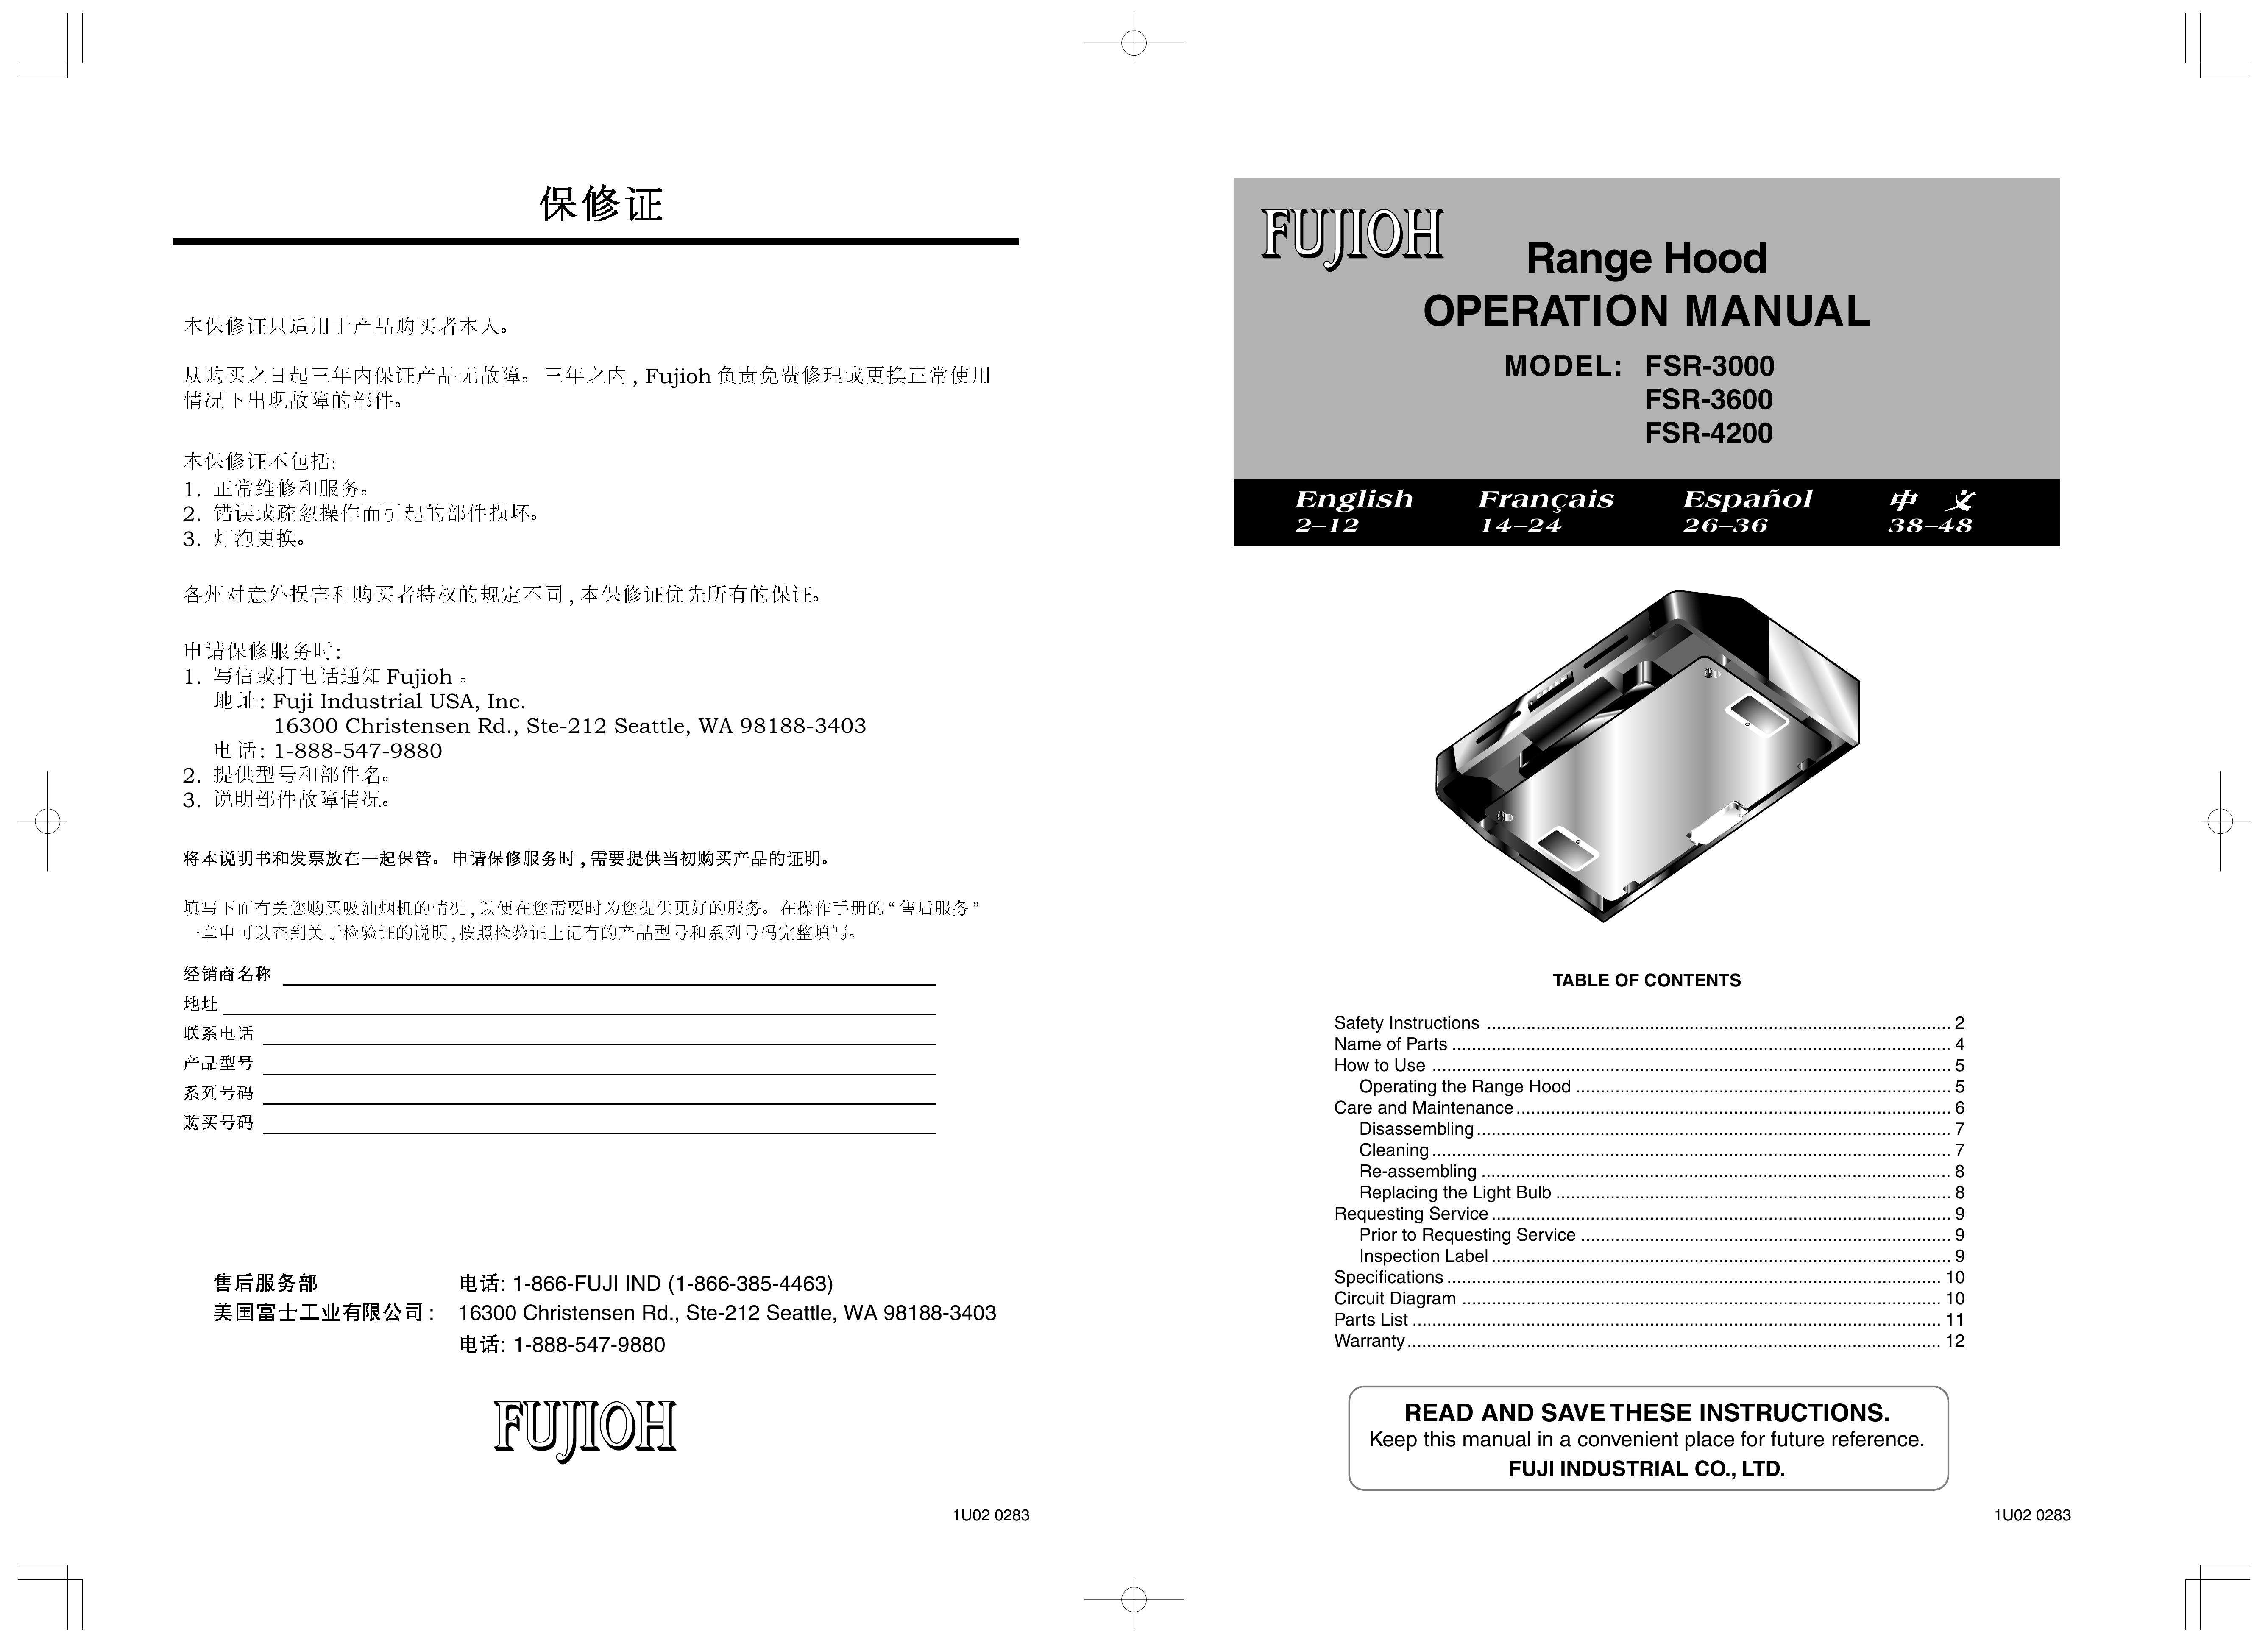 Fujioh FSR-3600 Ventilation Hood User Manual